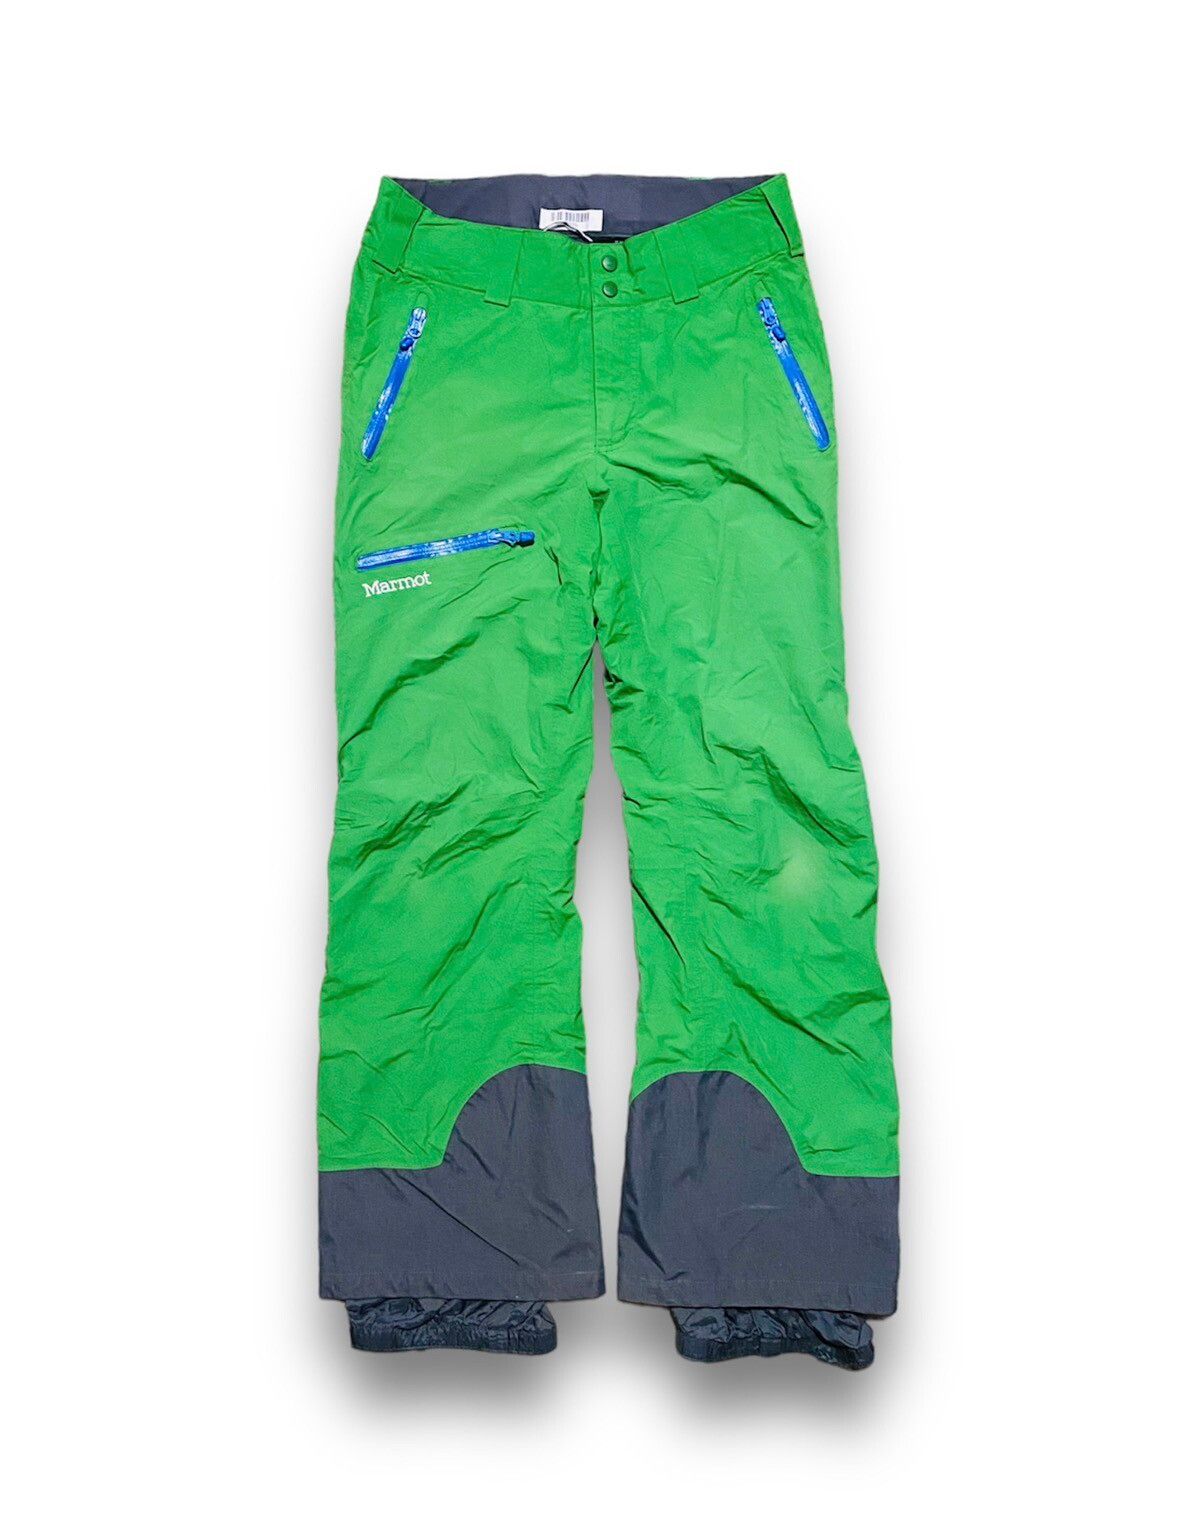 Marmot GTX Pants Trousers Skiing Hiking Outdoor Green Men XL - 4